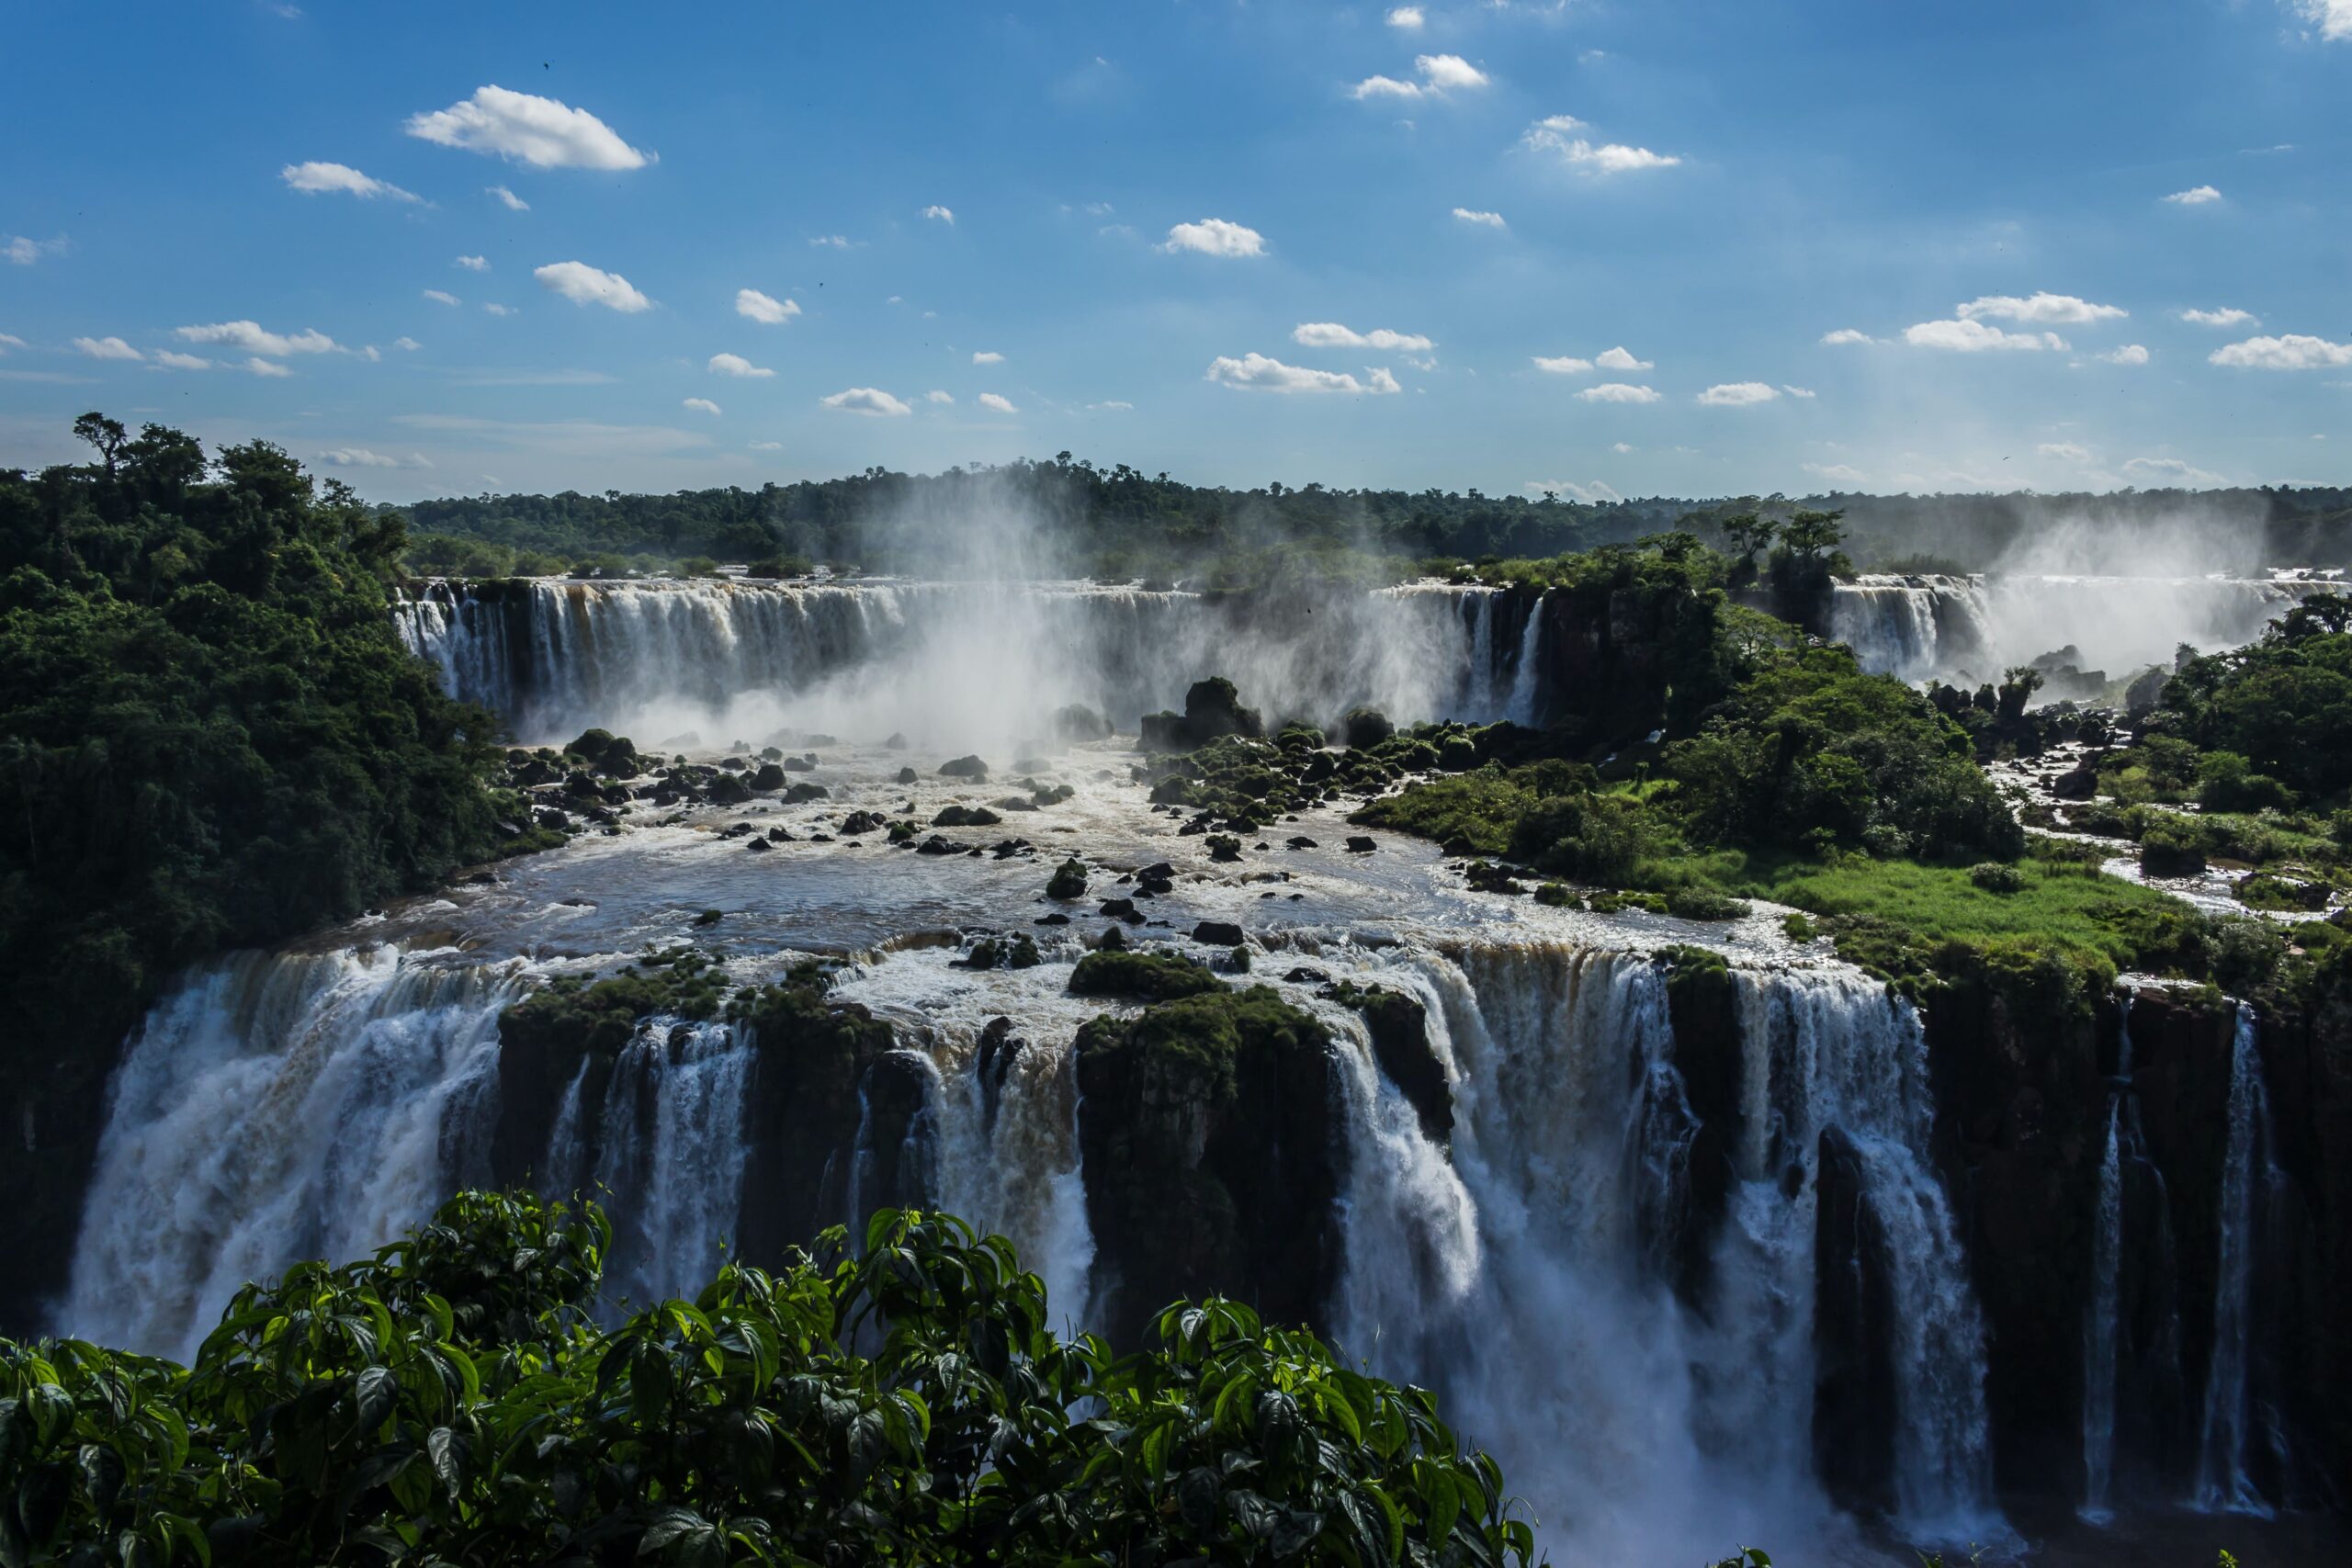 Iguazu Falls Facts